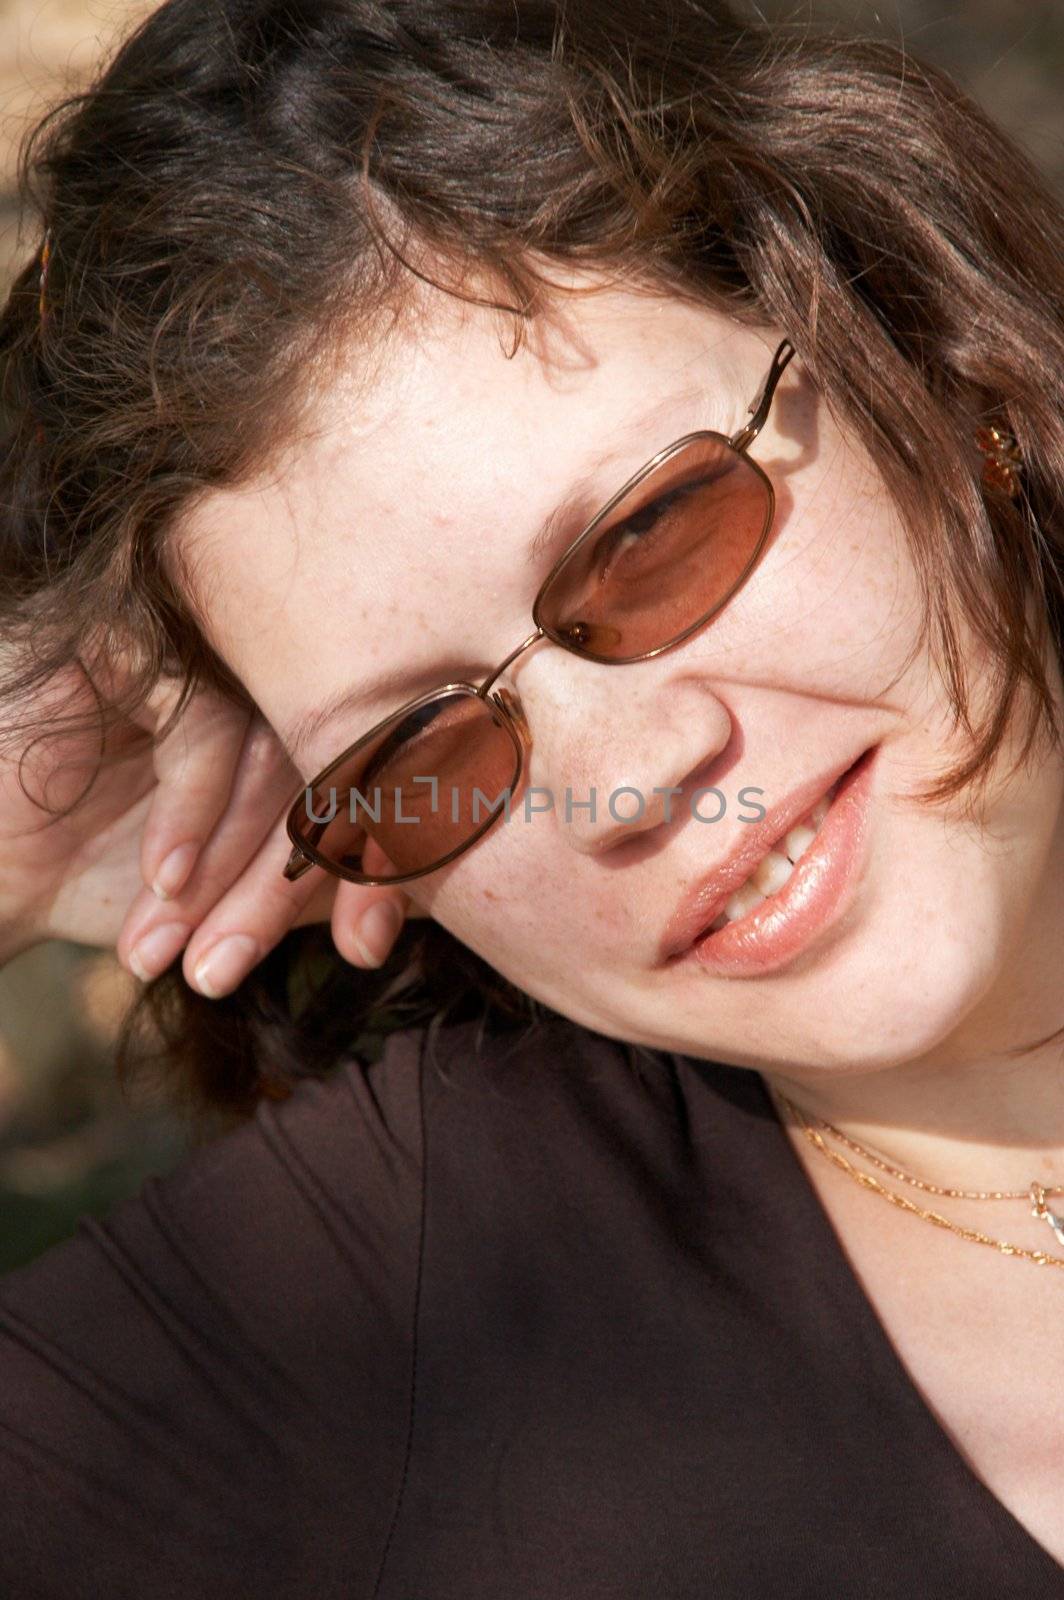 Portrait of the girl in glasses